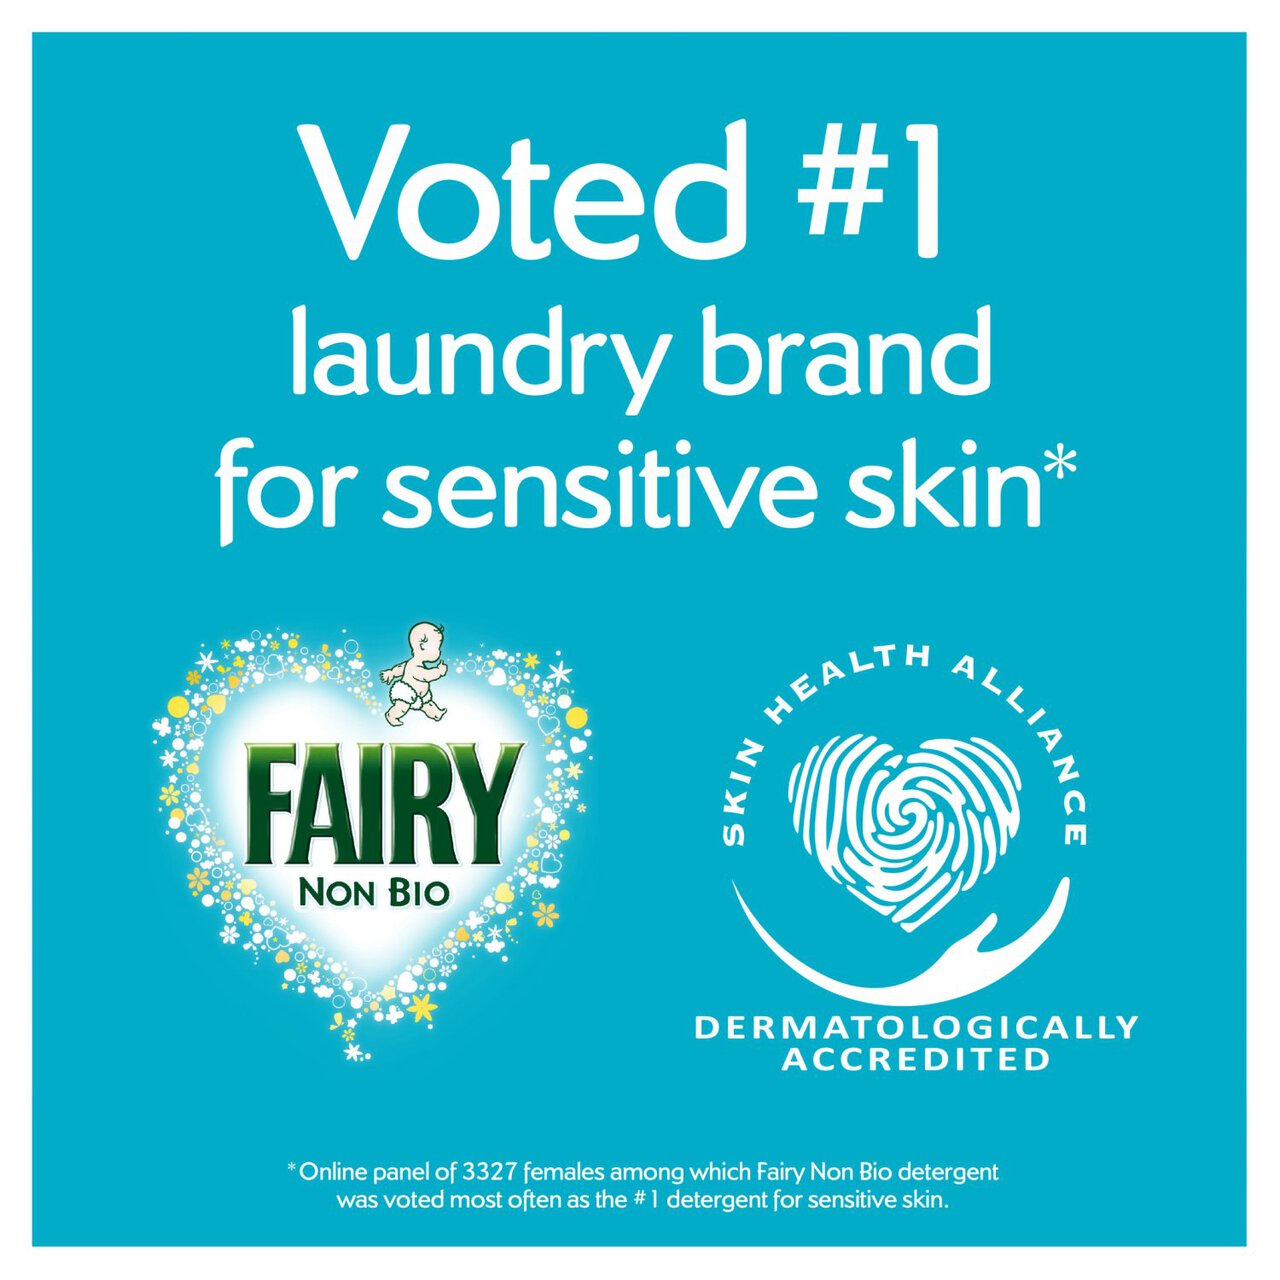 Fairy Non Bio Washing Liquid Gel For Sensitive Skin 35 Washes 1225ml